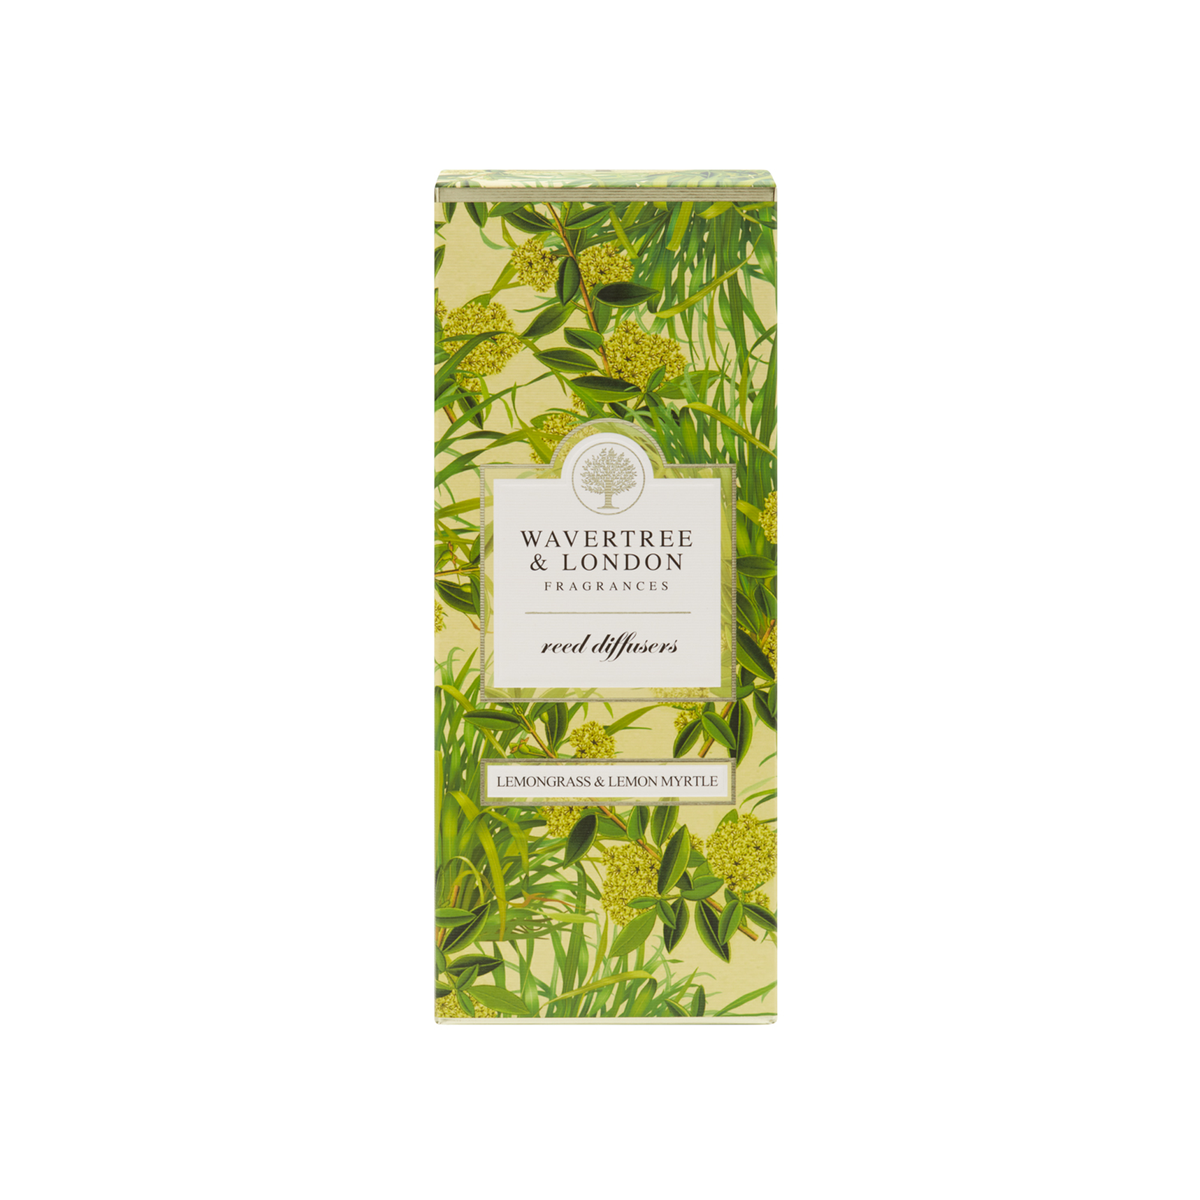 Wavertree & London "Lemongrass & Lemon Myrtle" Fragrance Diffuser